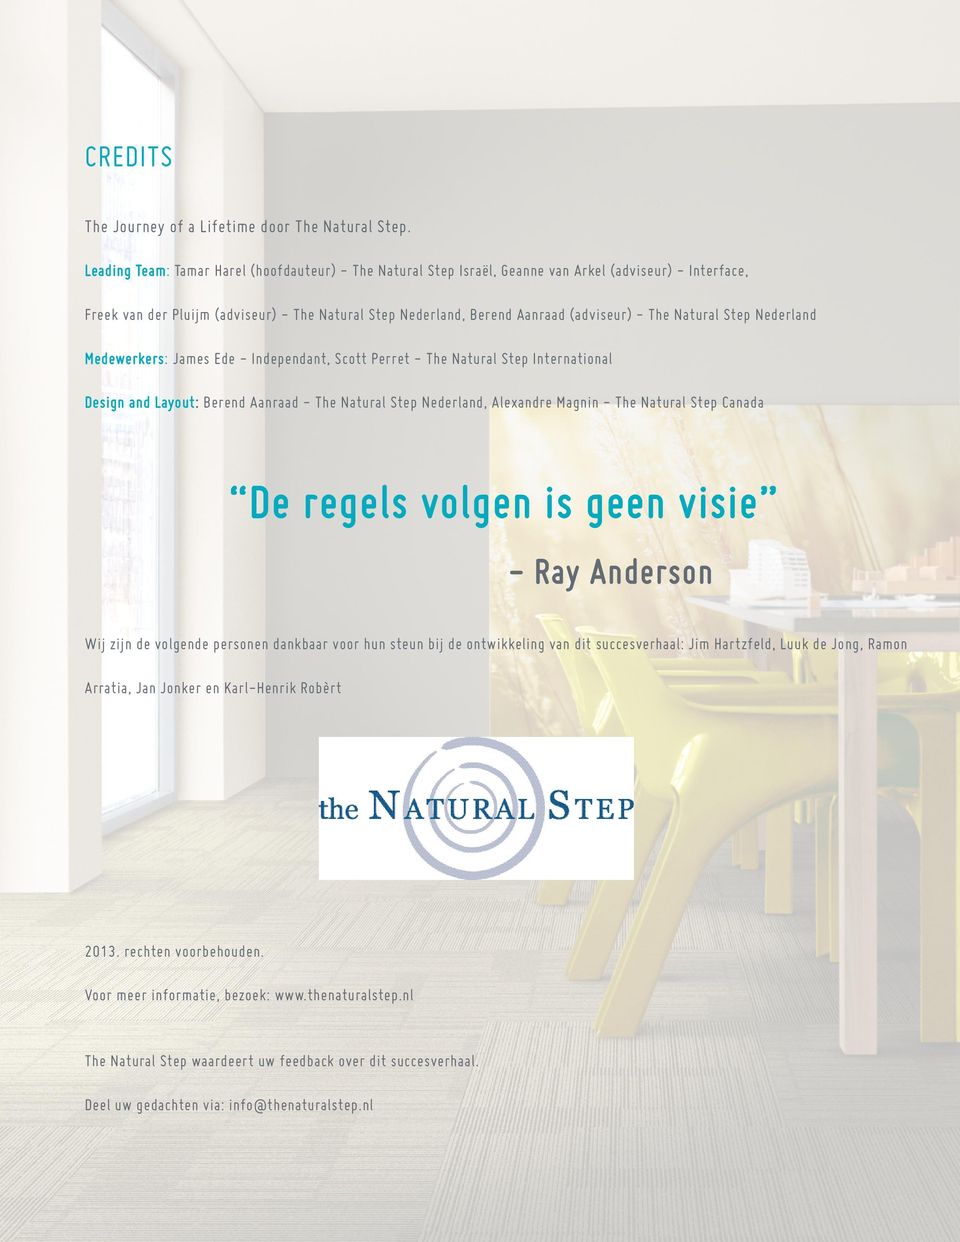 The Natural Step Nederland Medewerkers: James Ede - Independant, Scott Perret - The Natural Step International Design and Layout: Berend Aanraad - The Natural Step Nederland, Alexandre Magnin - The